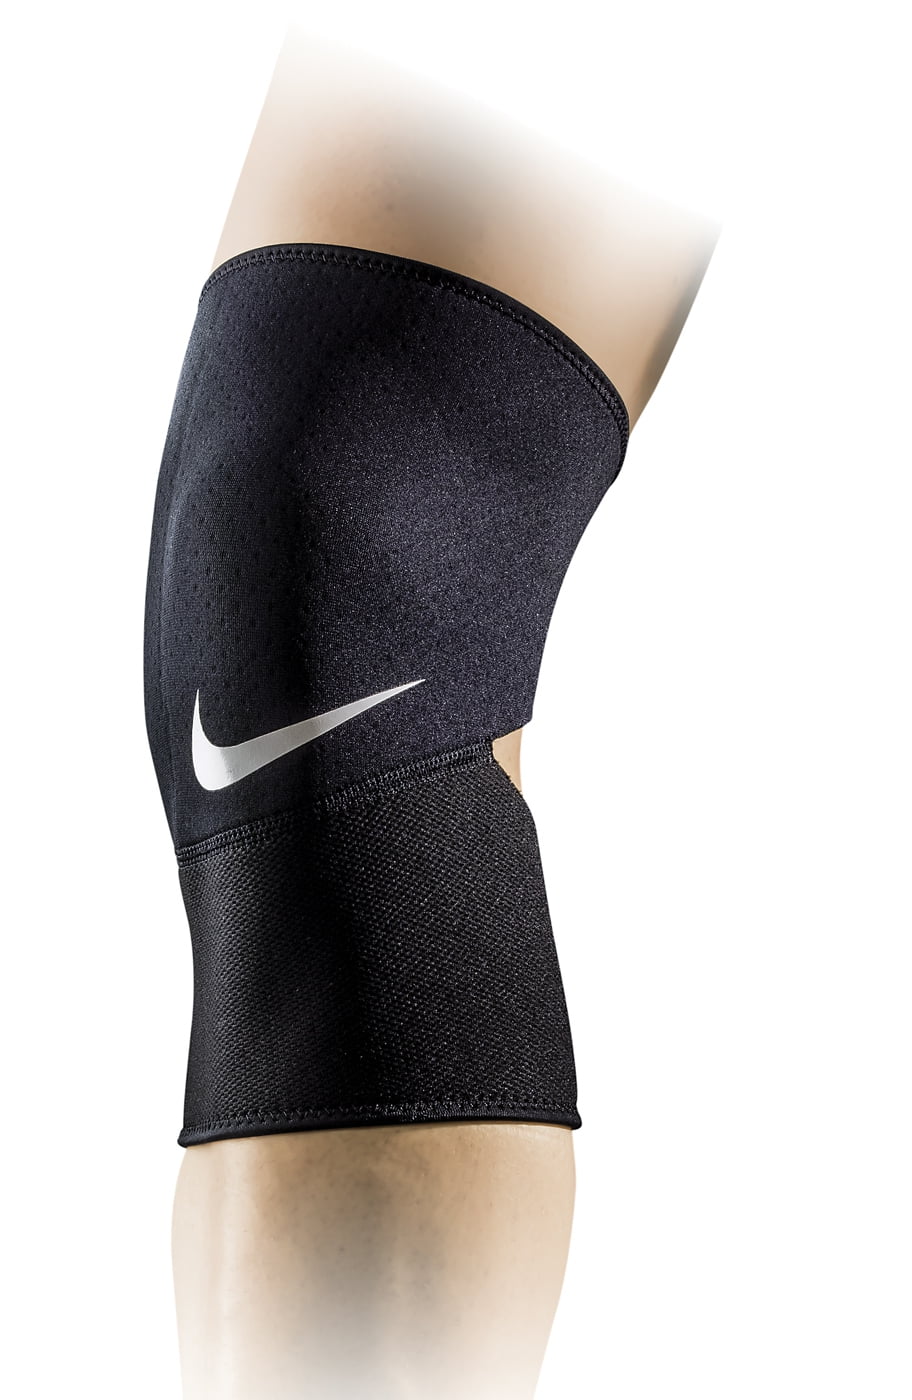 nike pro combat open patella knee sleeve